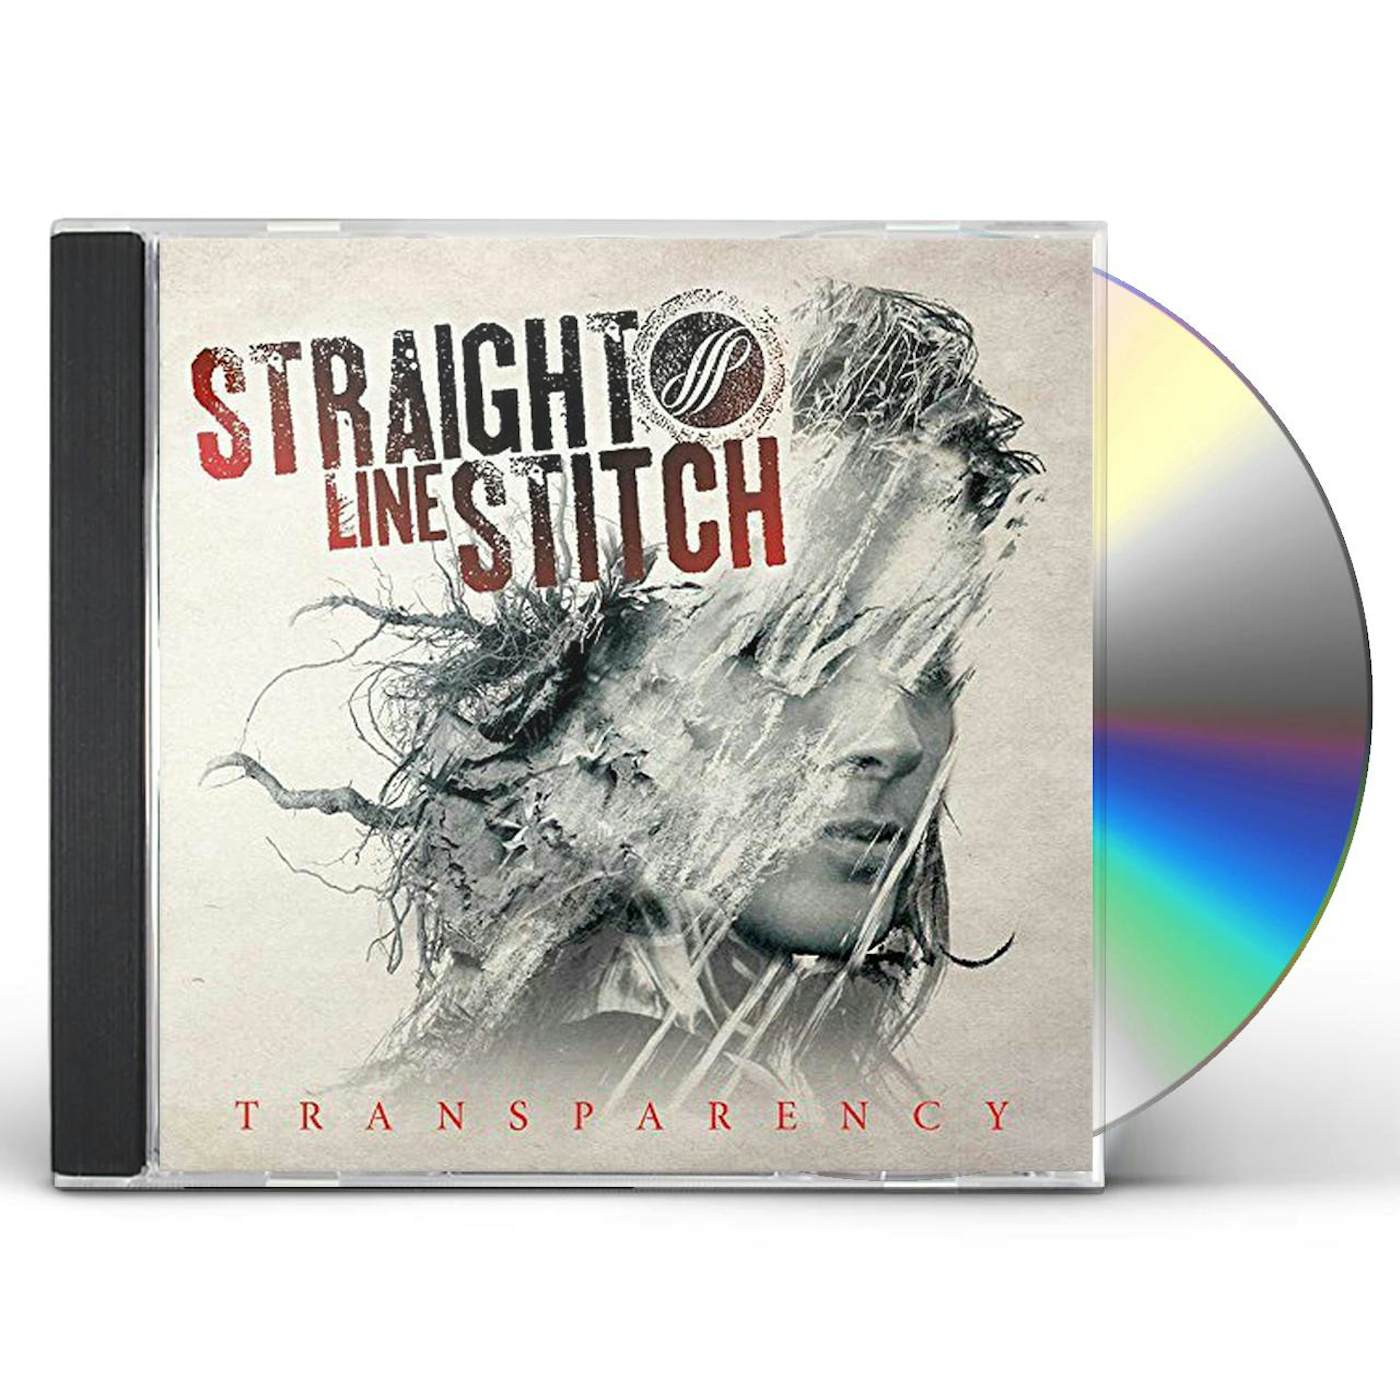 Straight Line Stitch TRANSPARENCY CD